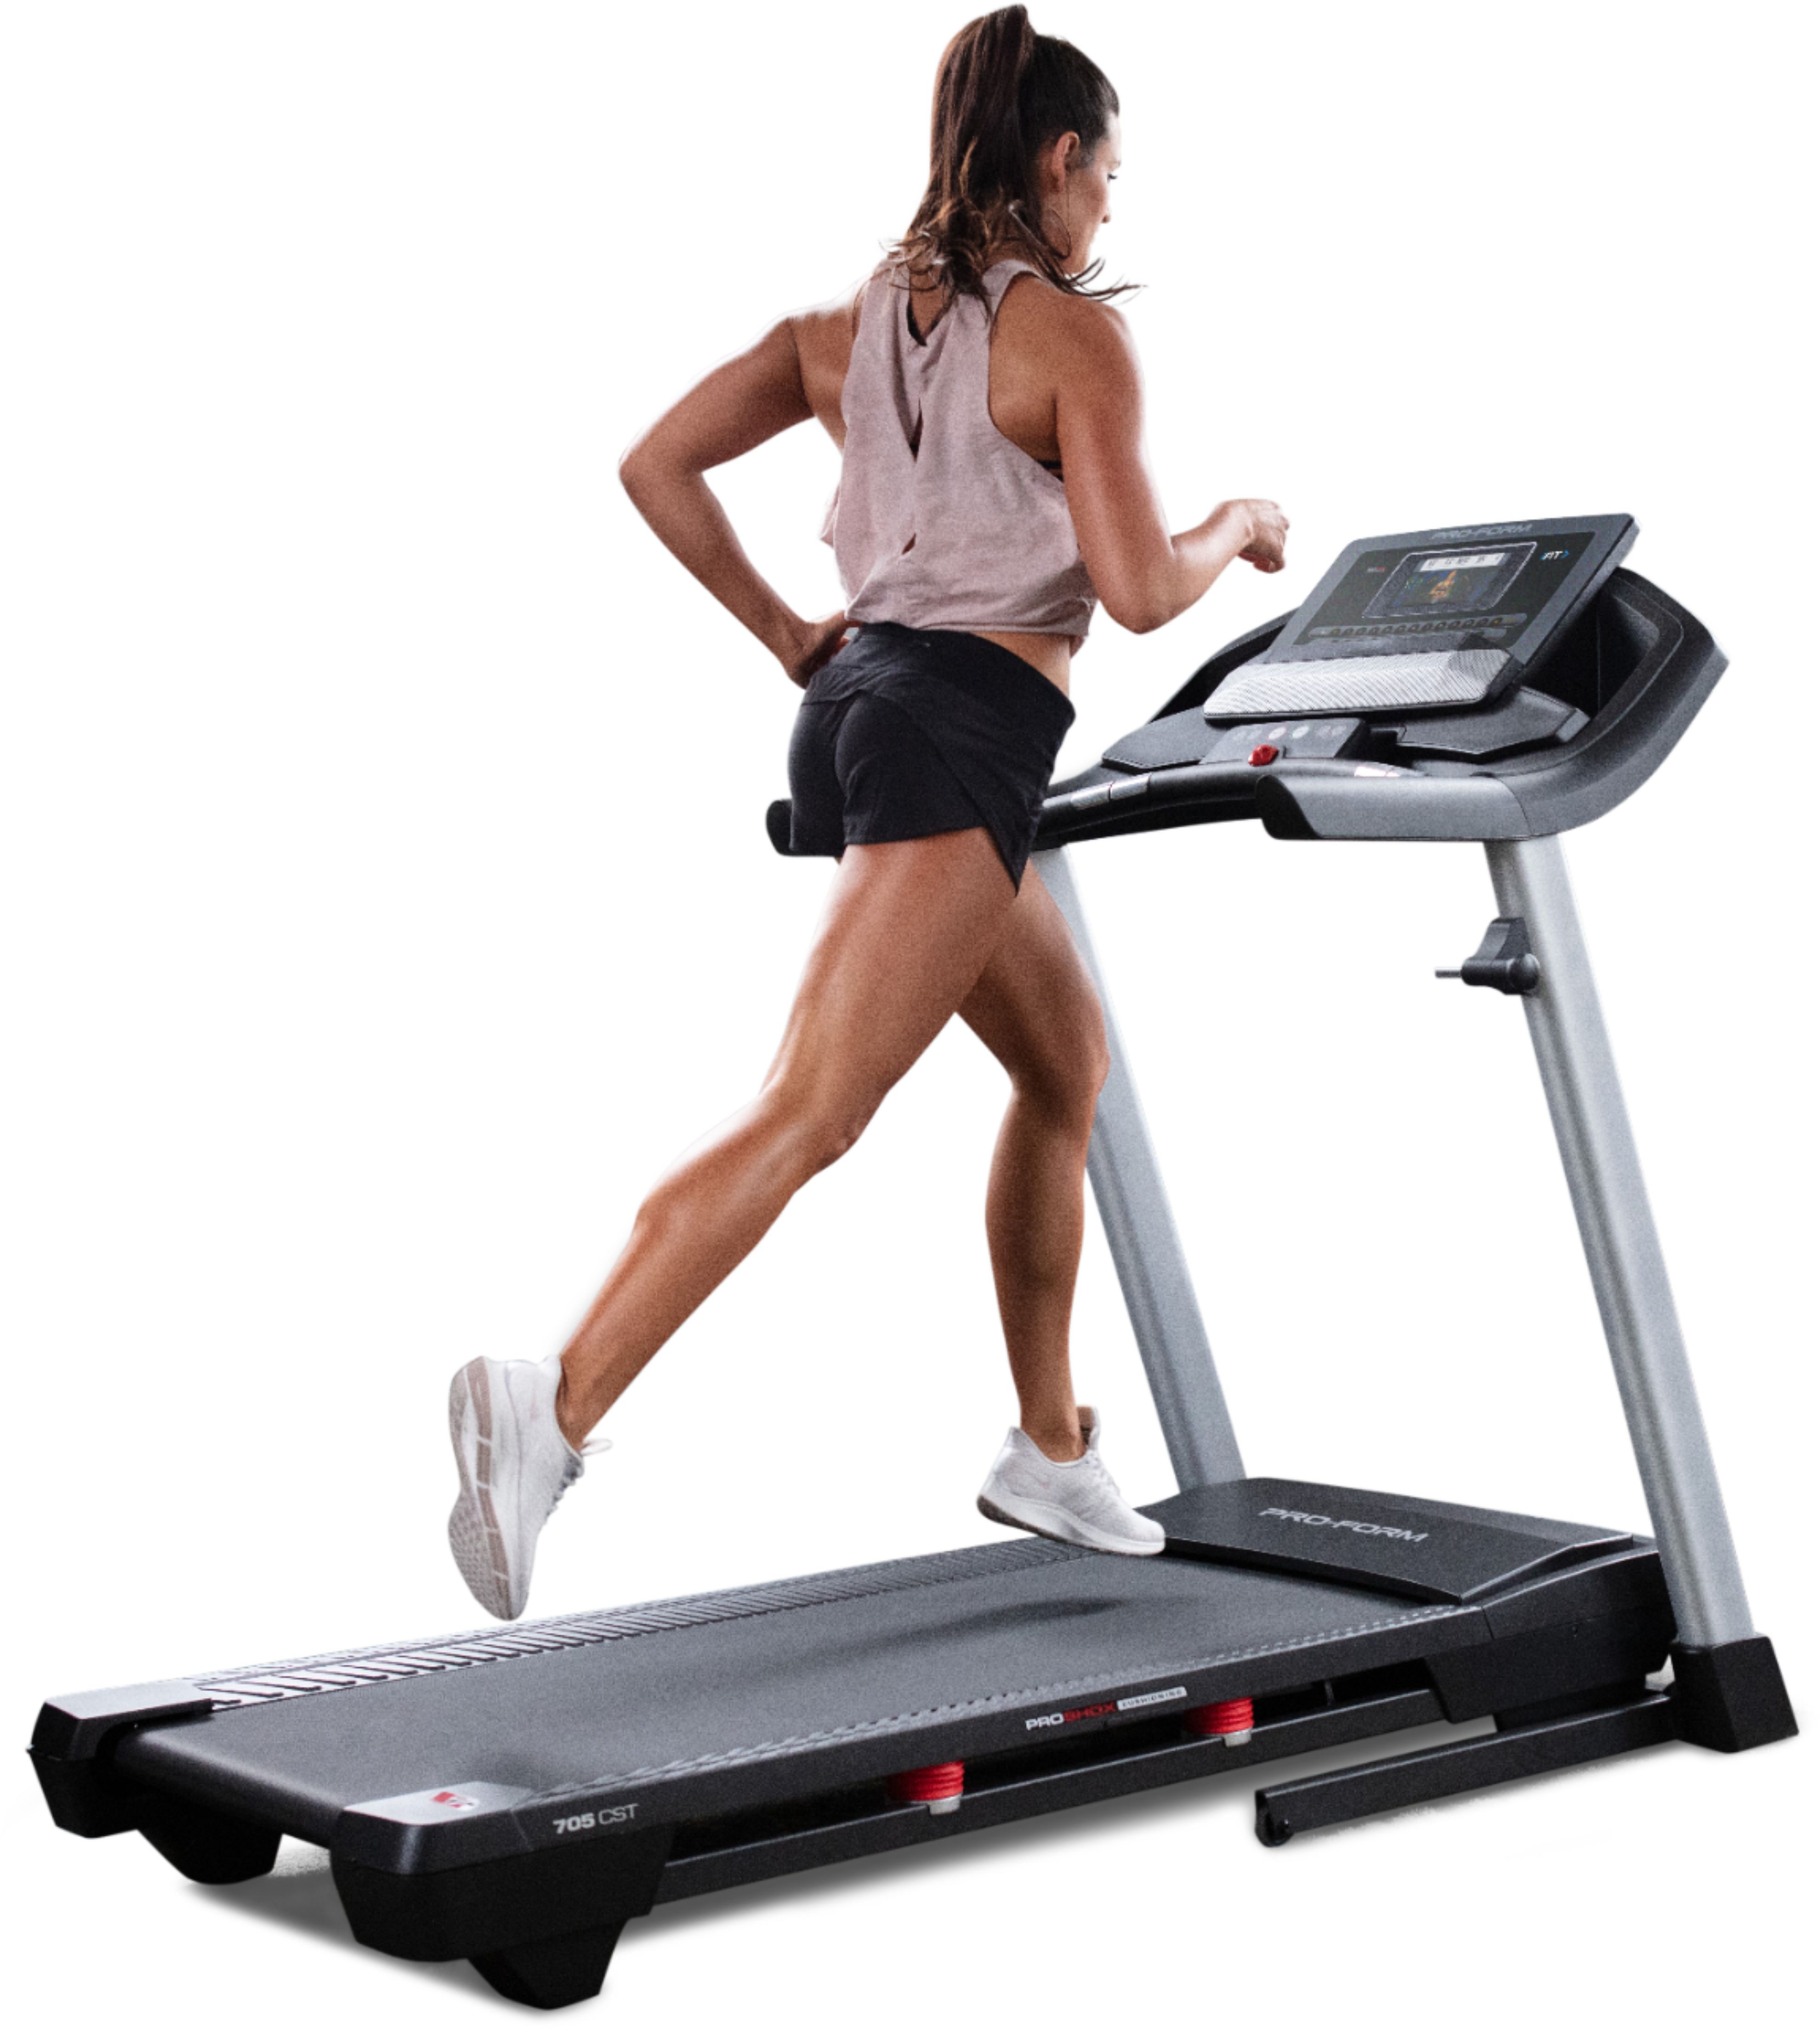 Treadmill Black PROFORM Unisexs Carbon T7